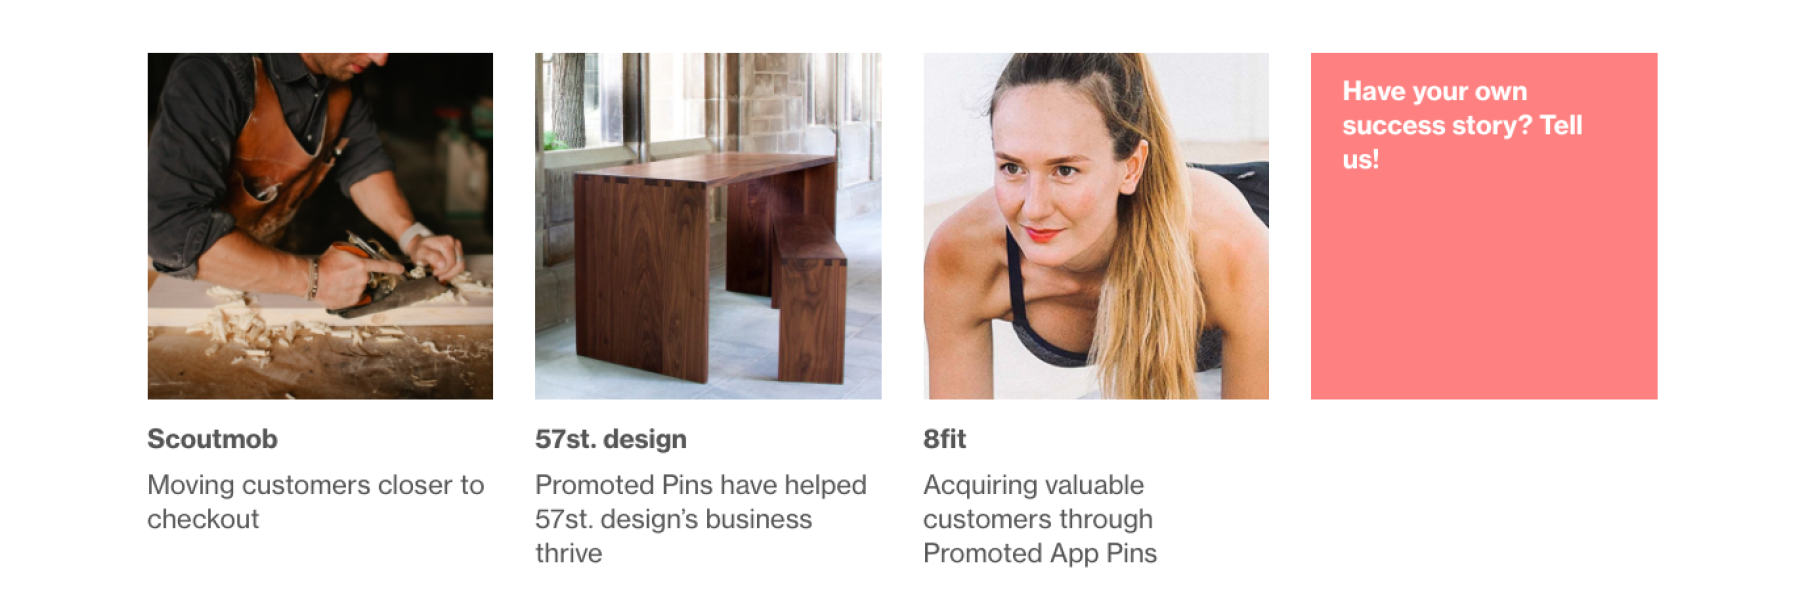 Pinterest for Business Success Stories Module